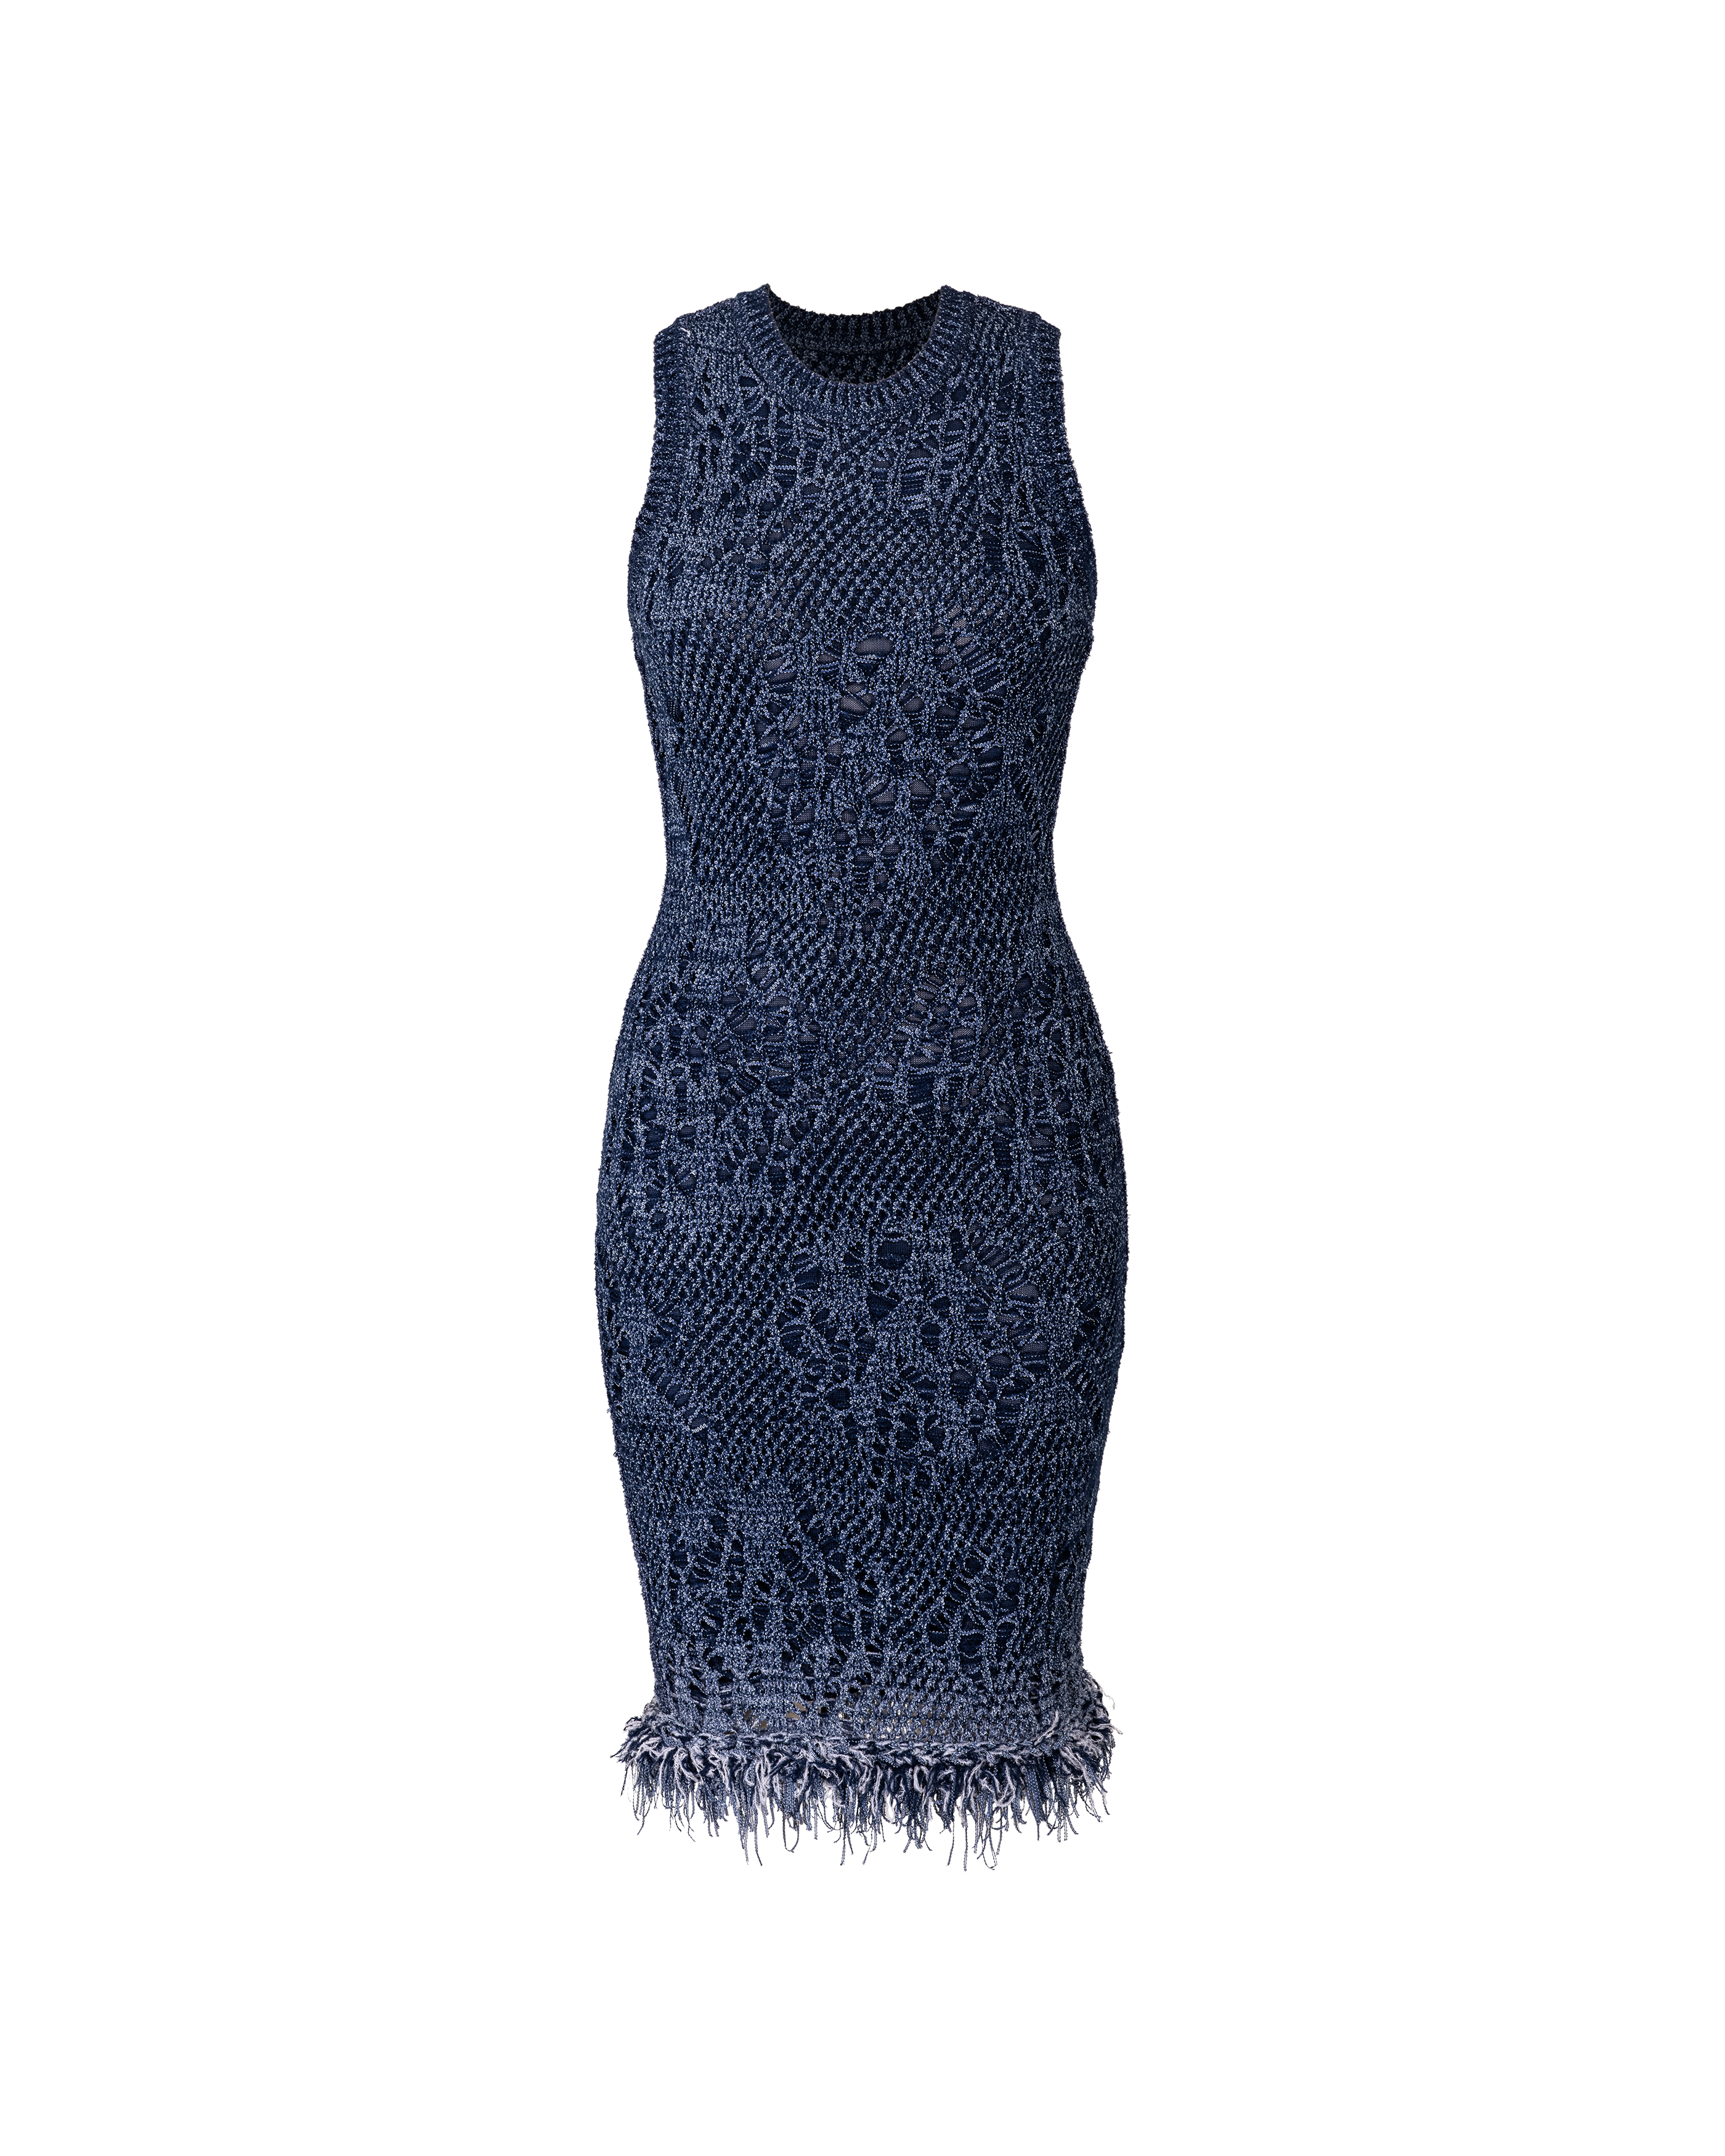 S/S 2000 Blue Knit Dress with Fringe Trim